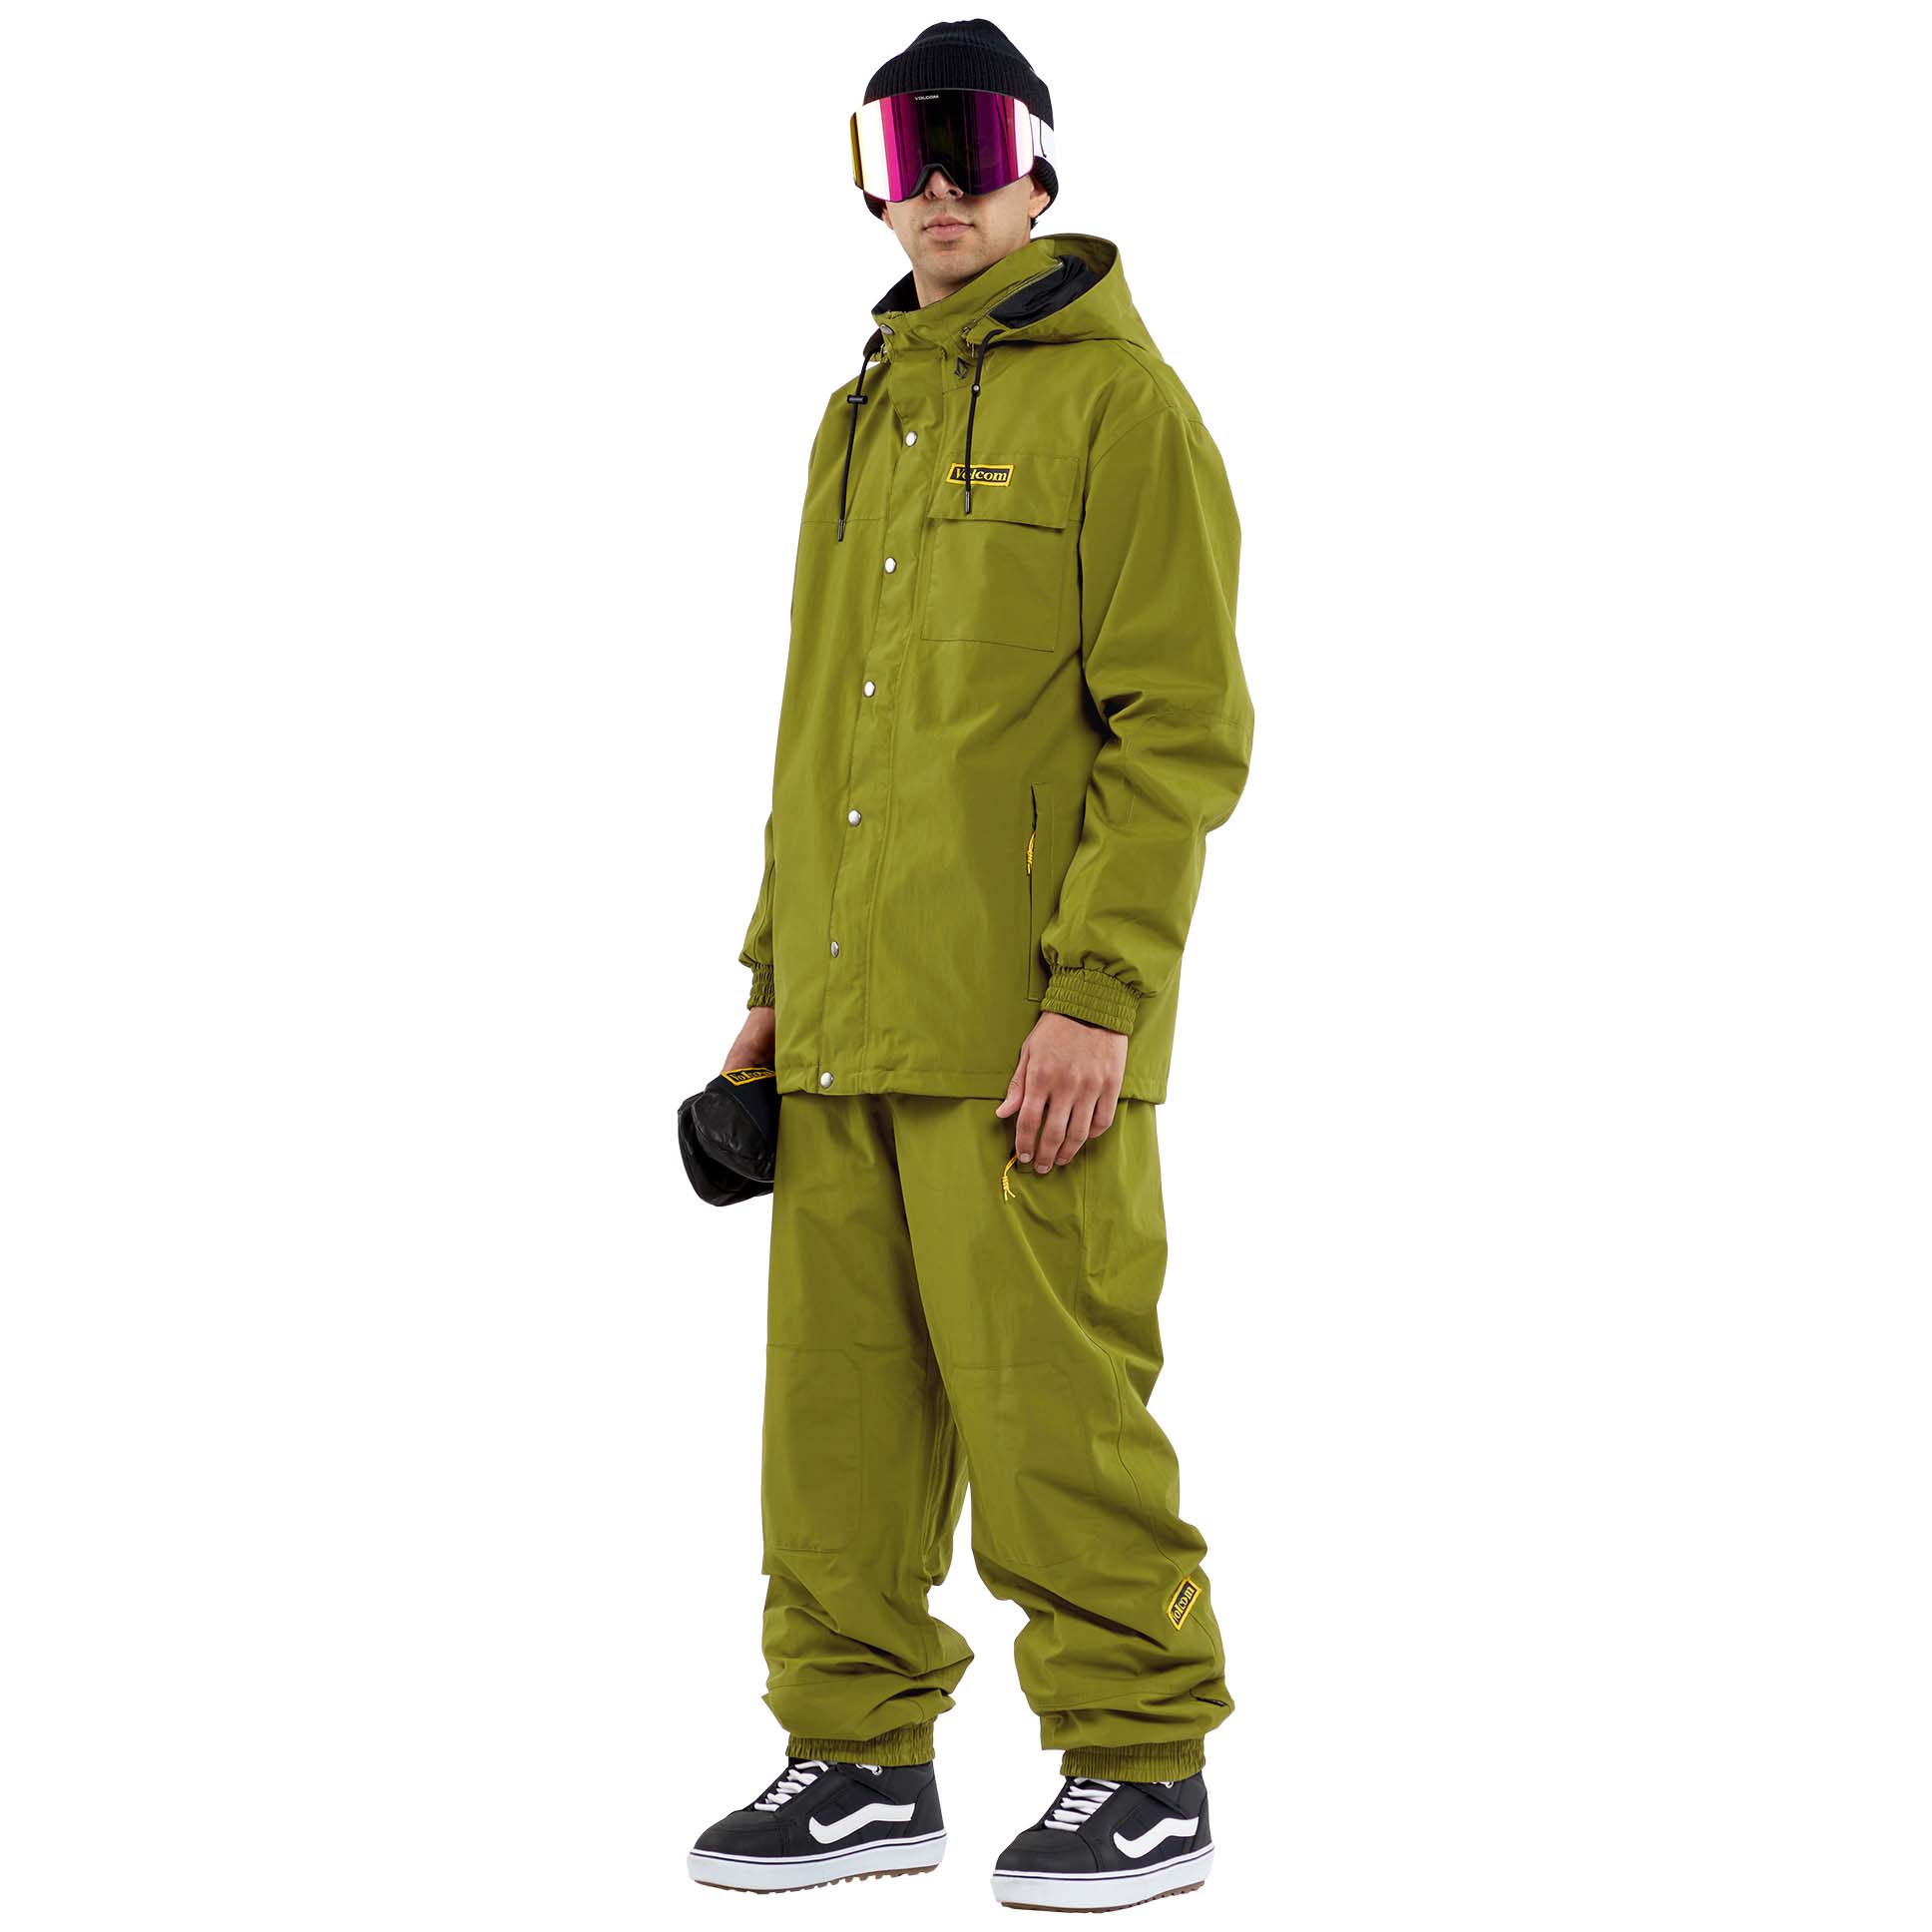 Volcom Longo Gore-Tex Ski/Snowboard Pants